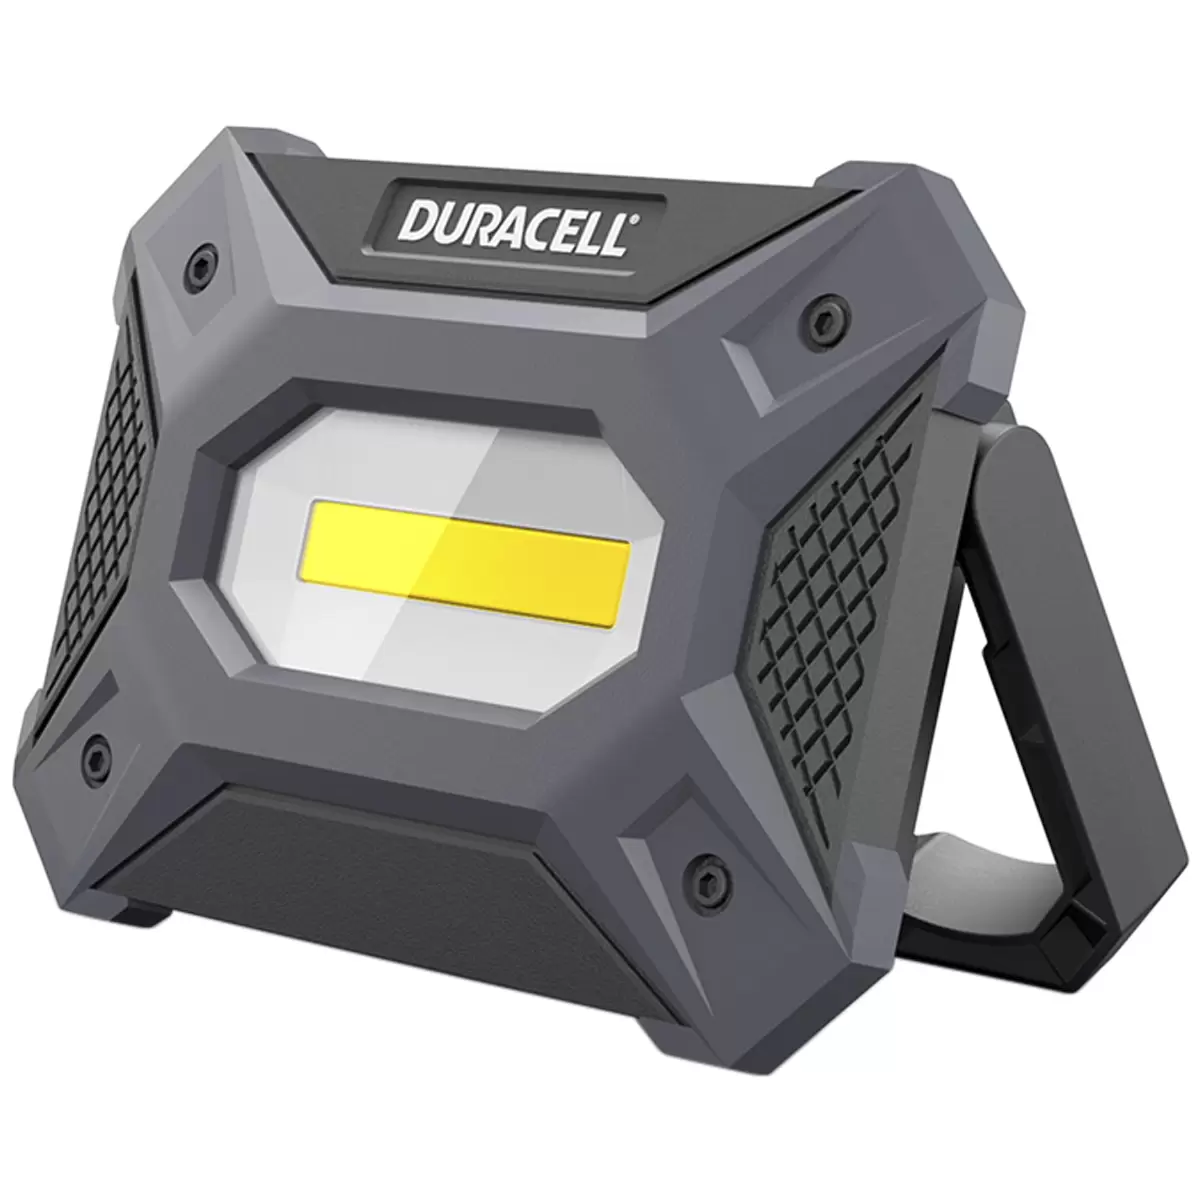 Duracell 600 Lumen Work Light 3 Pack